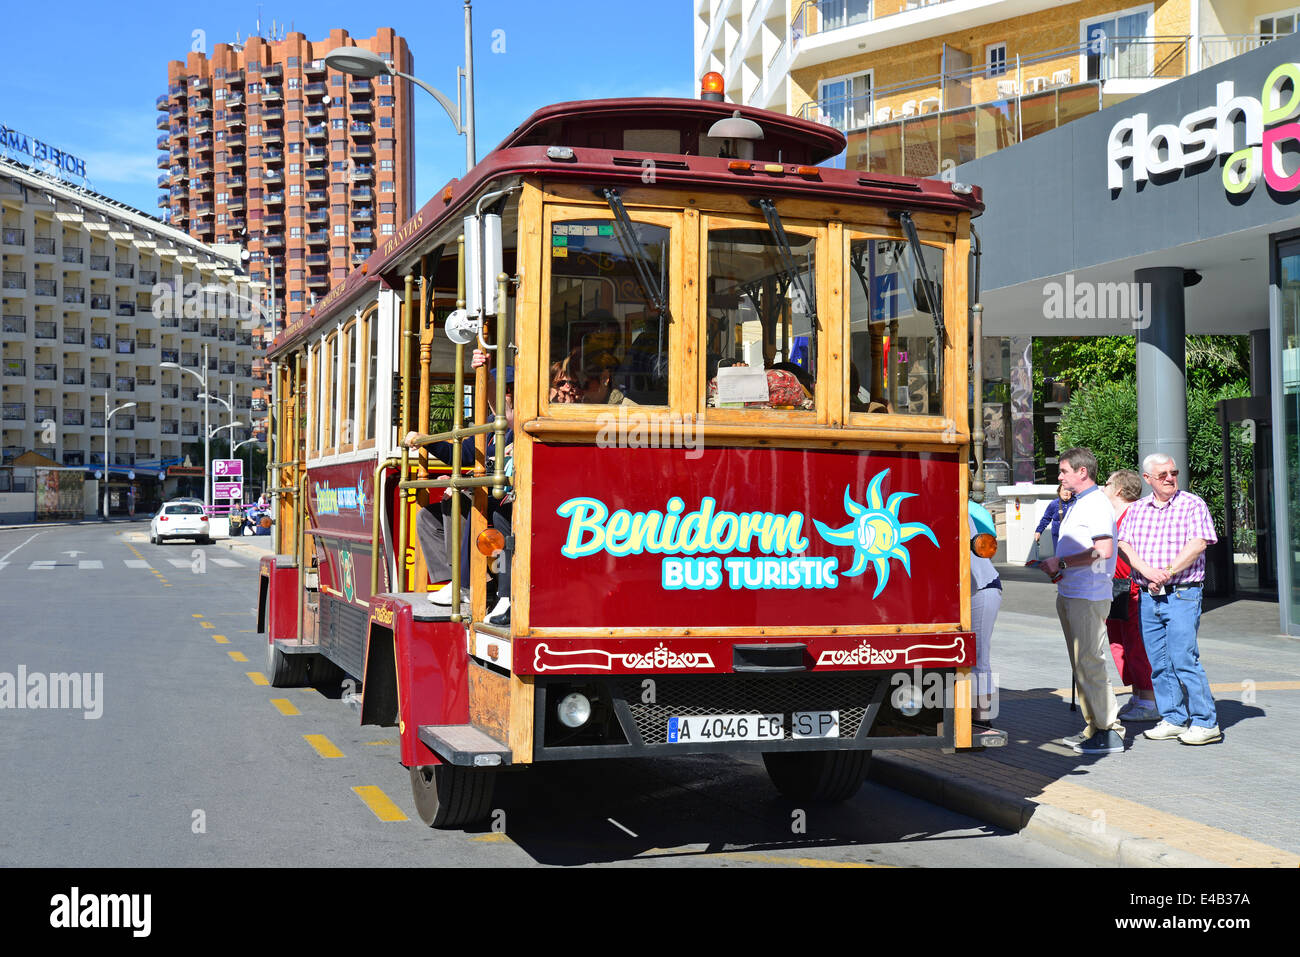 Benidorm tourist bus, Calle Gerona, Benidorm, Costa Blanca, Alicante  Province,Spain Stock Photo - Alamy